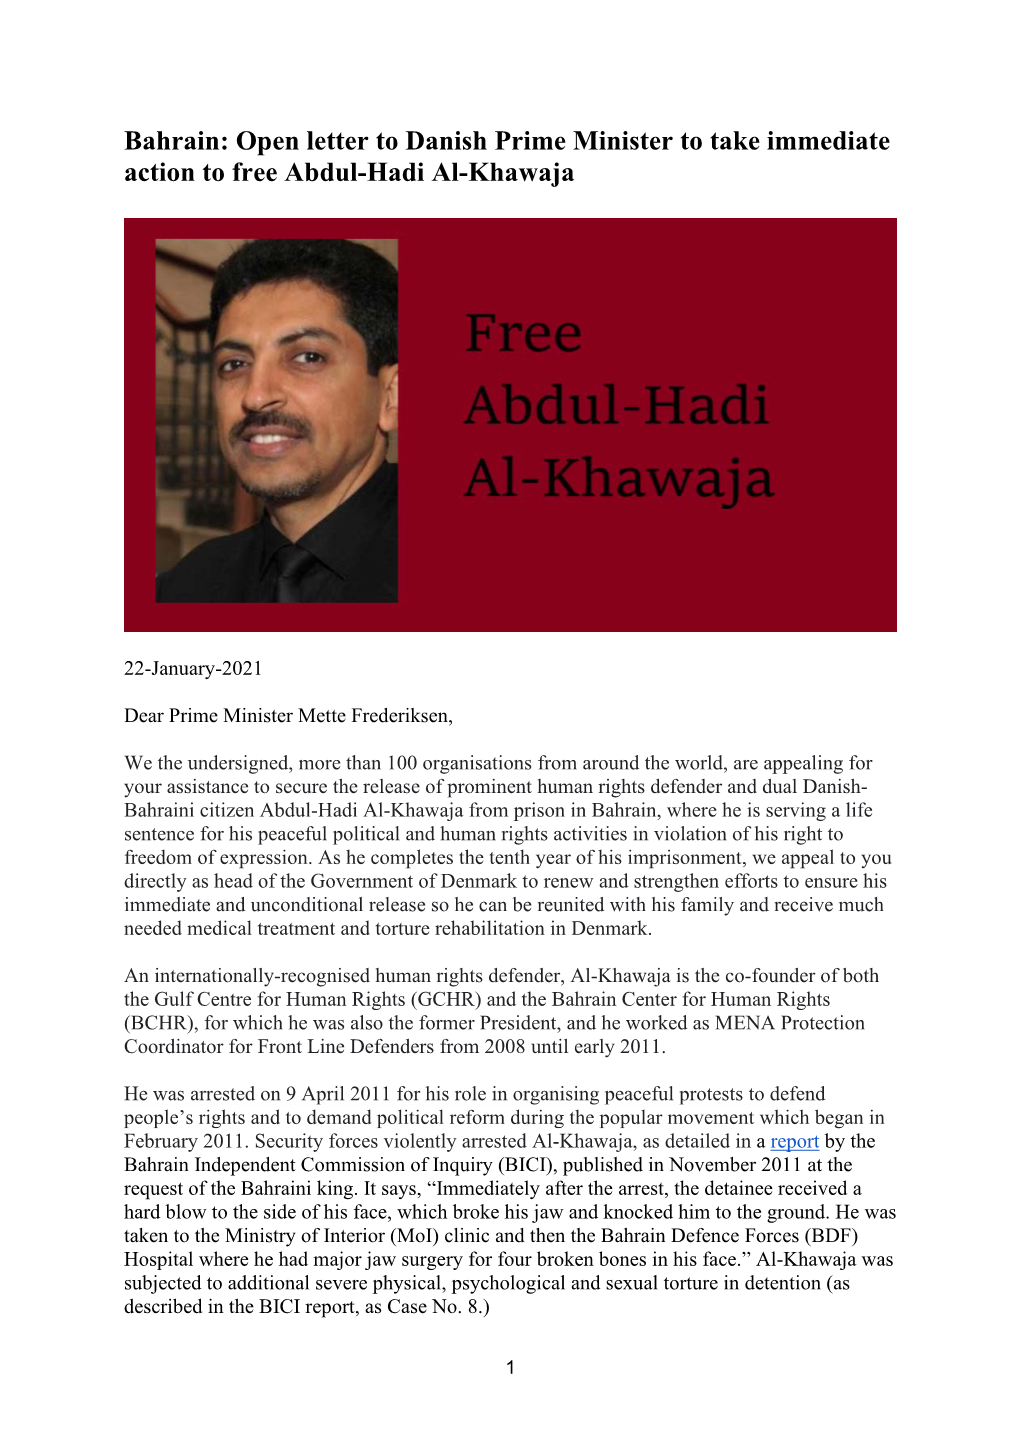 Bahrain: Open Letter to Danish Prime Minister to Take Immediate Action to Free Abdul-Hadi Al-Khawaja